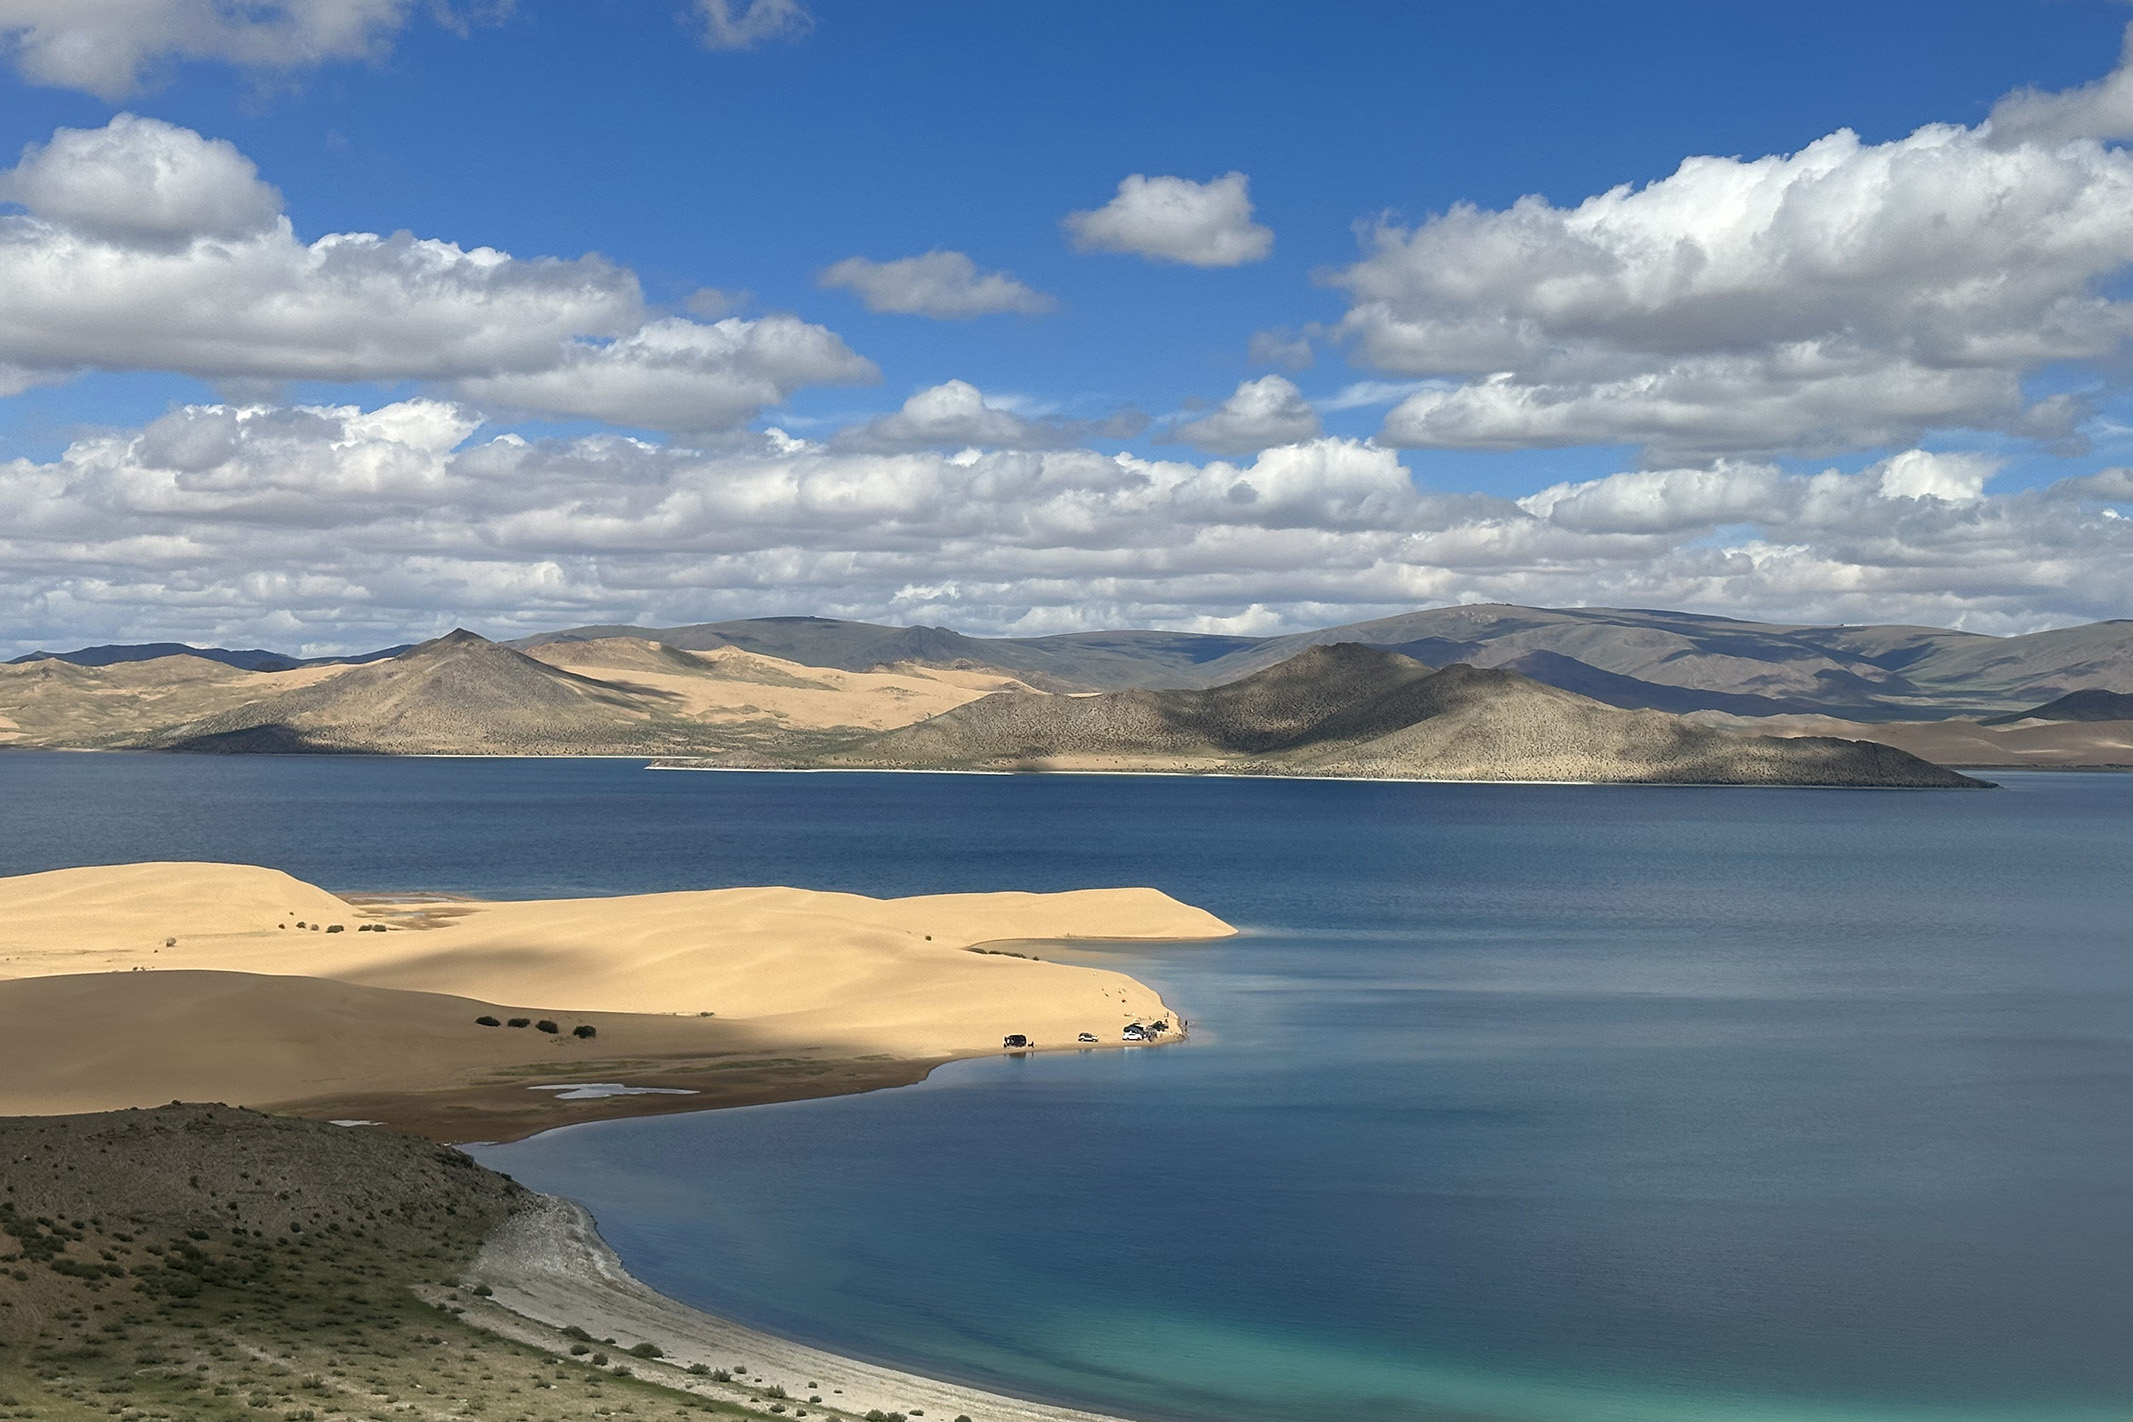 Ulaagchiin khar lake in Mongolia